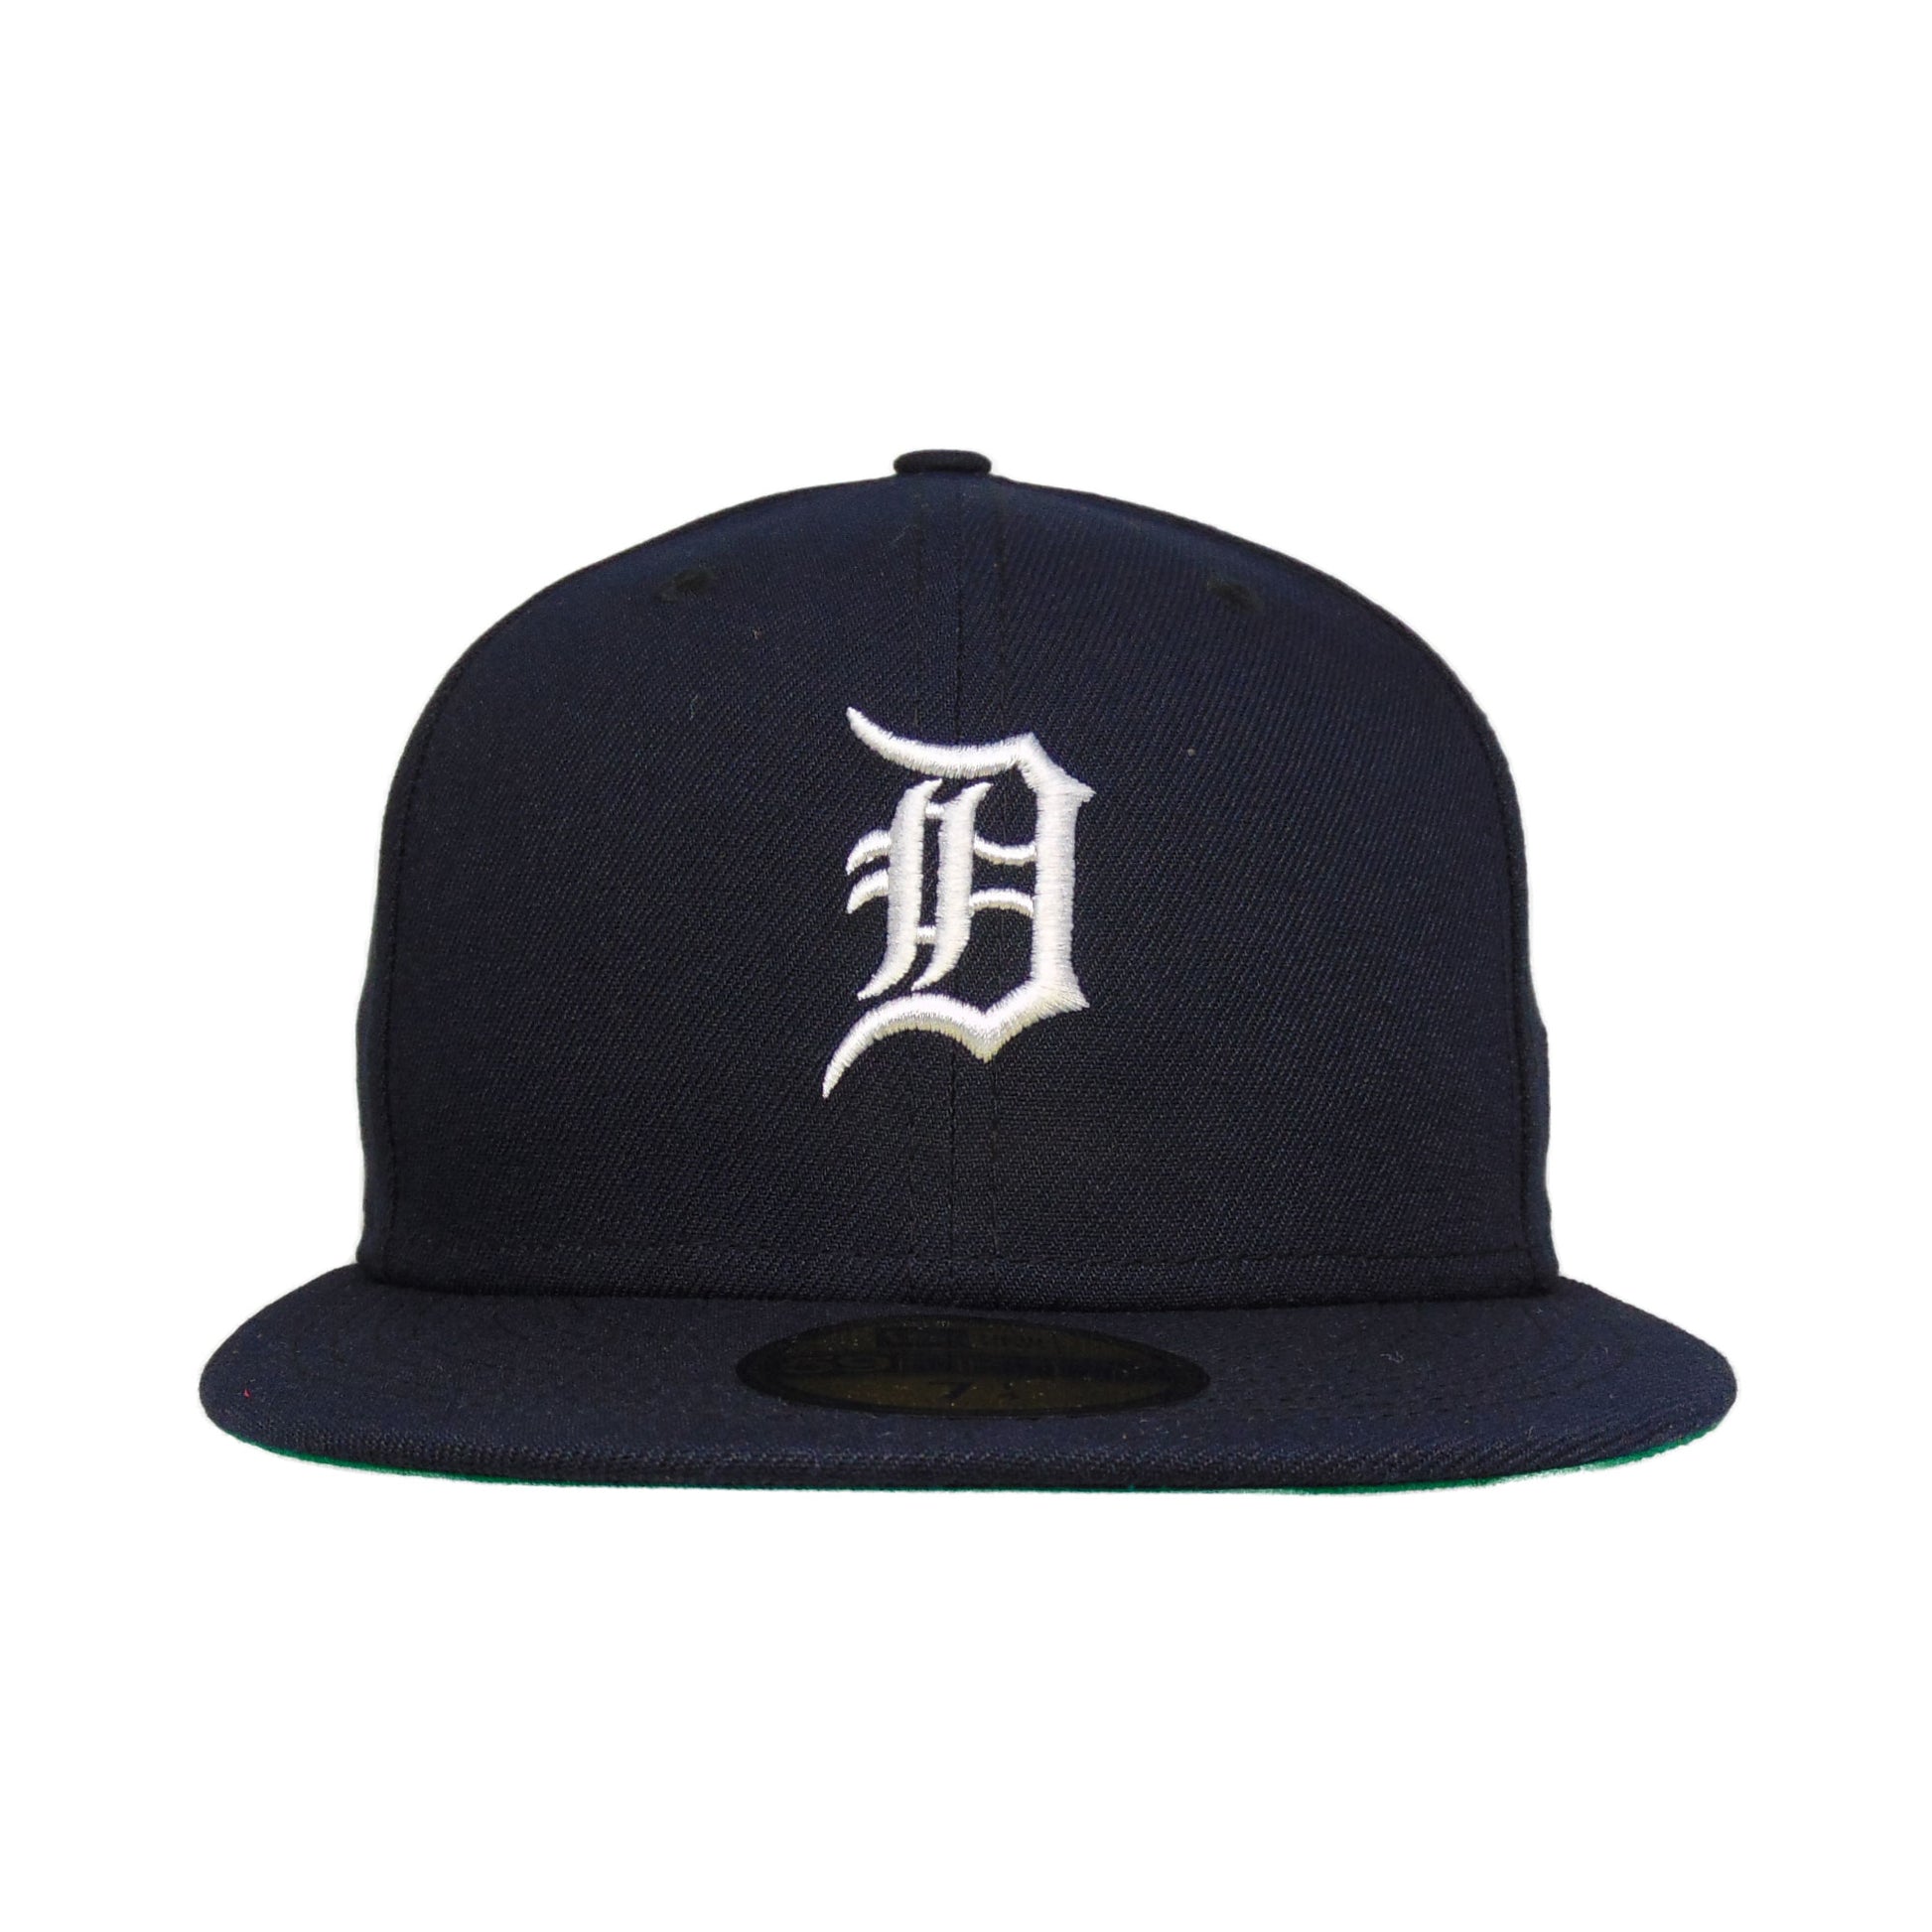 Detroit Tigers Hat Baseball Cap Fitted 7 1/2 New Era Mens Blue Vintage